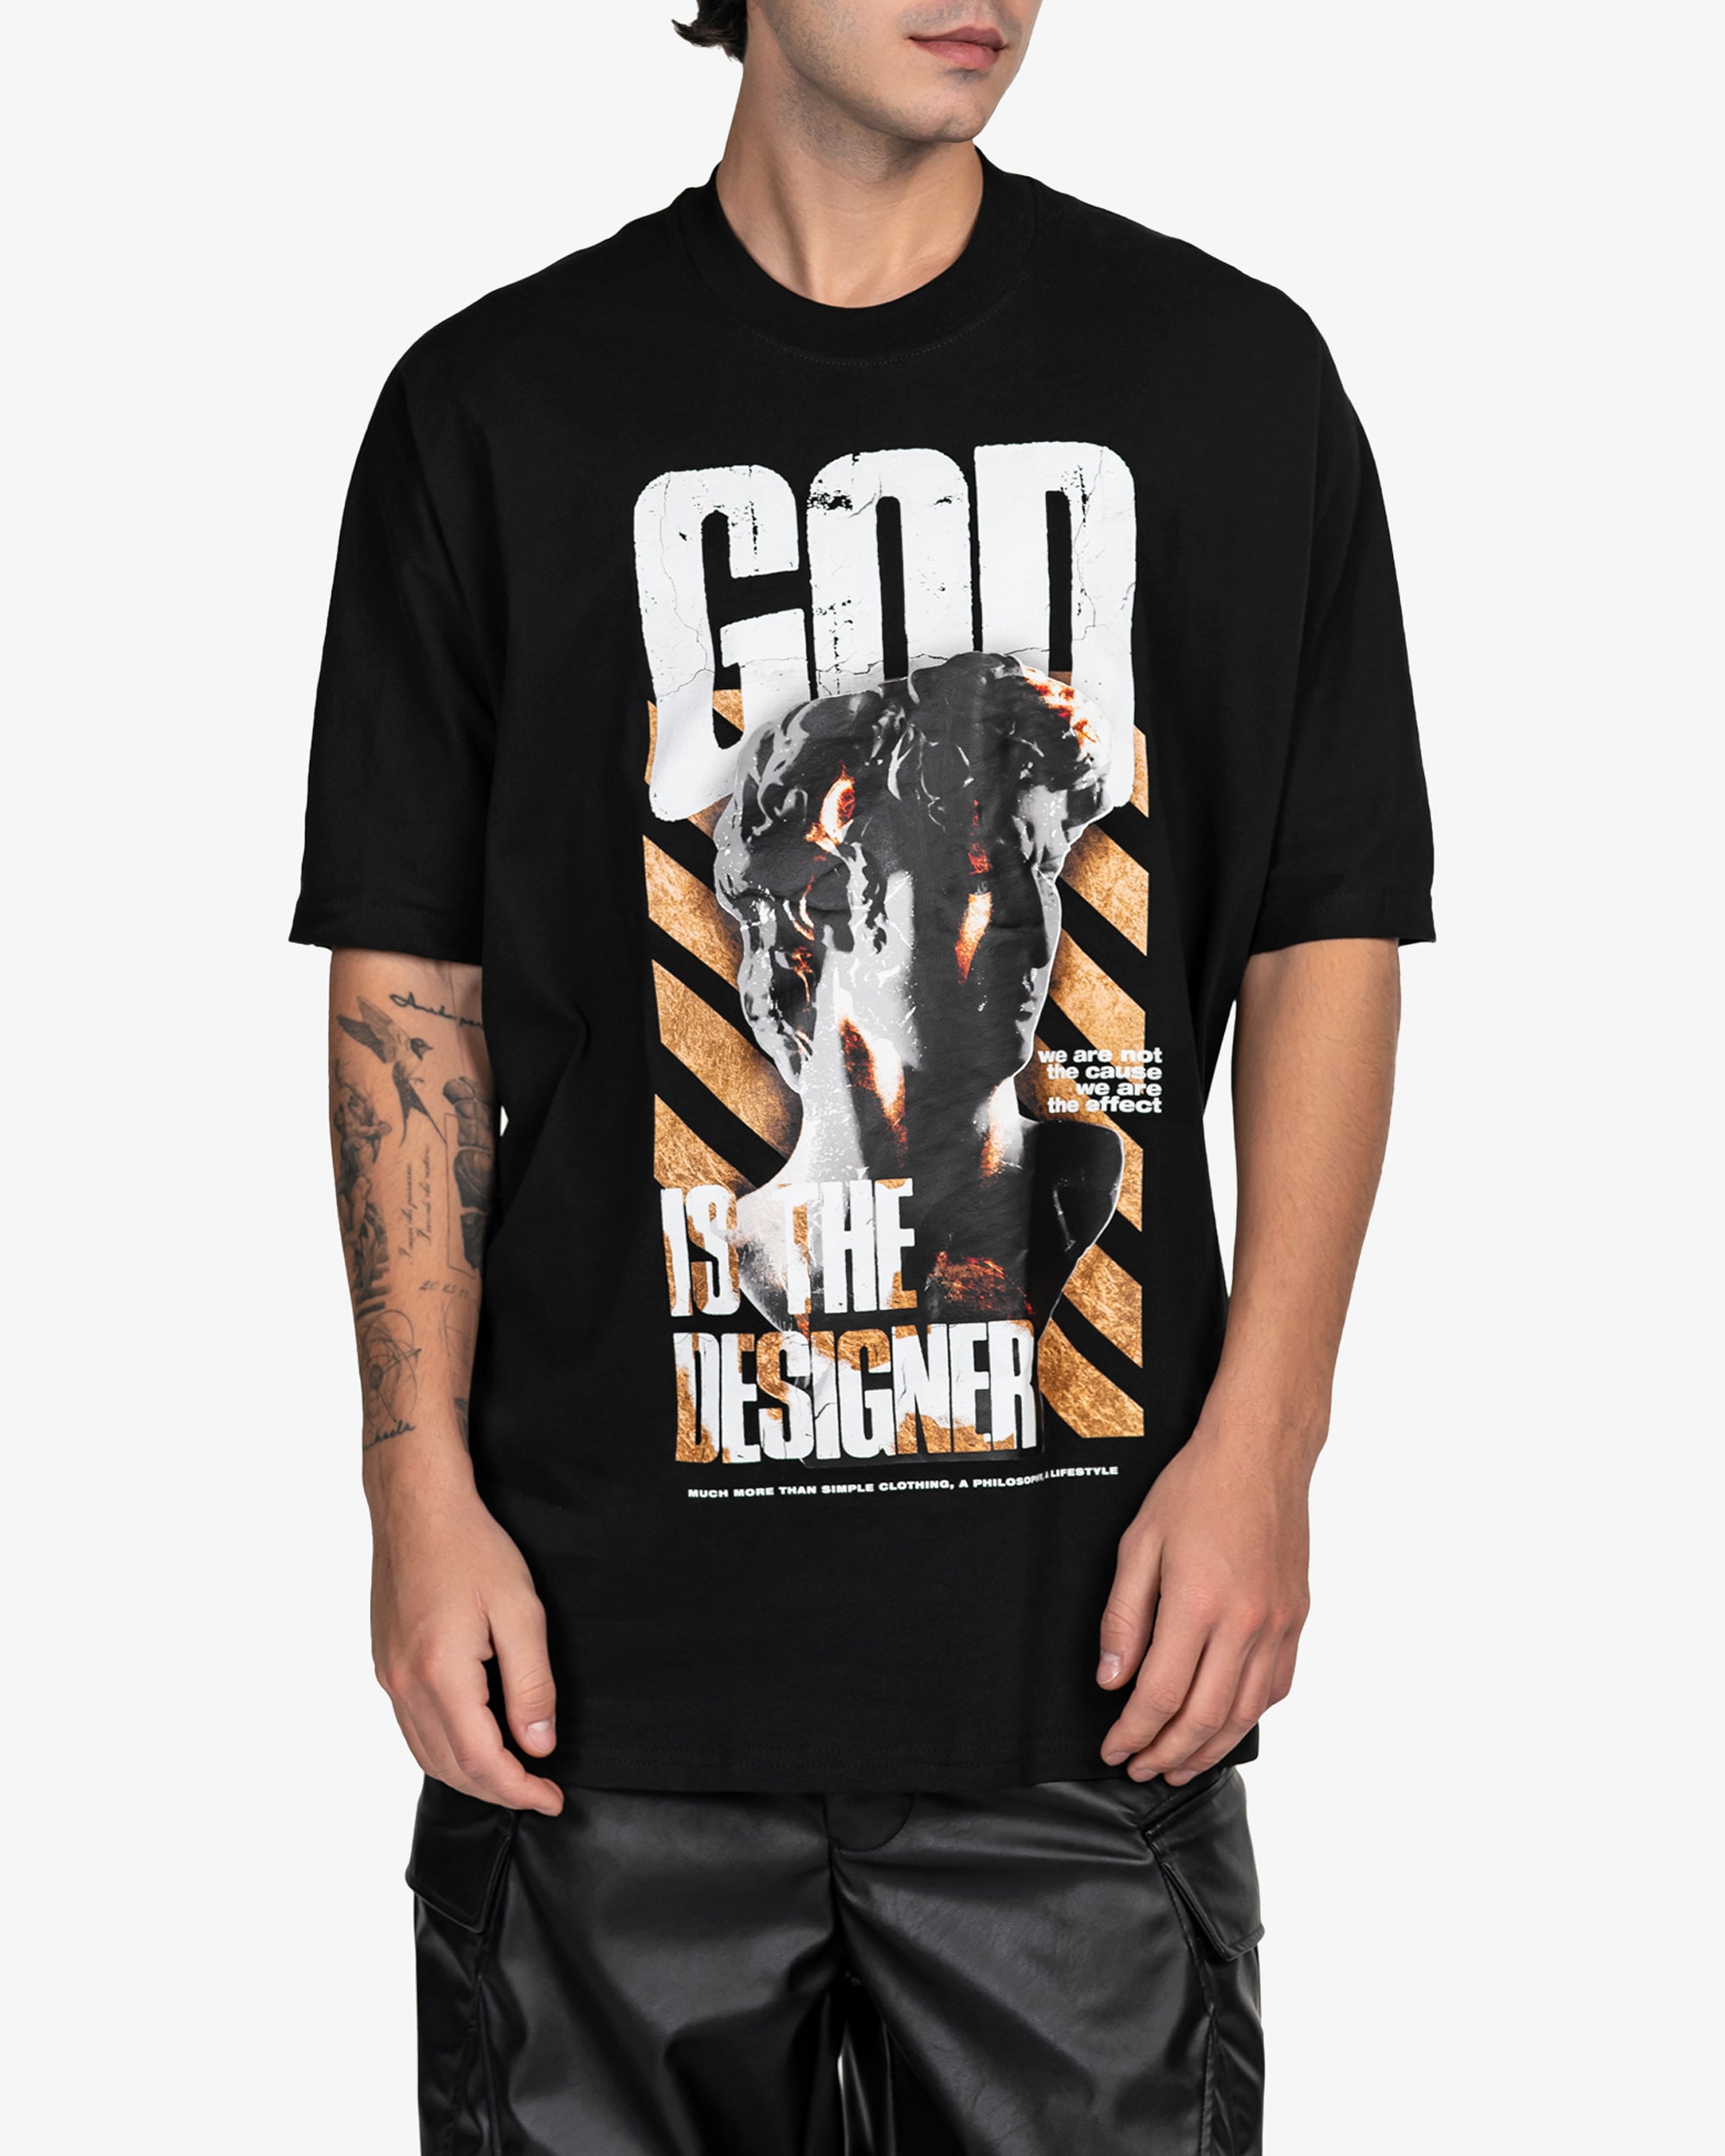 God is the designer t-shirt - T14944